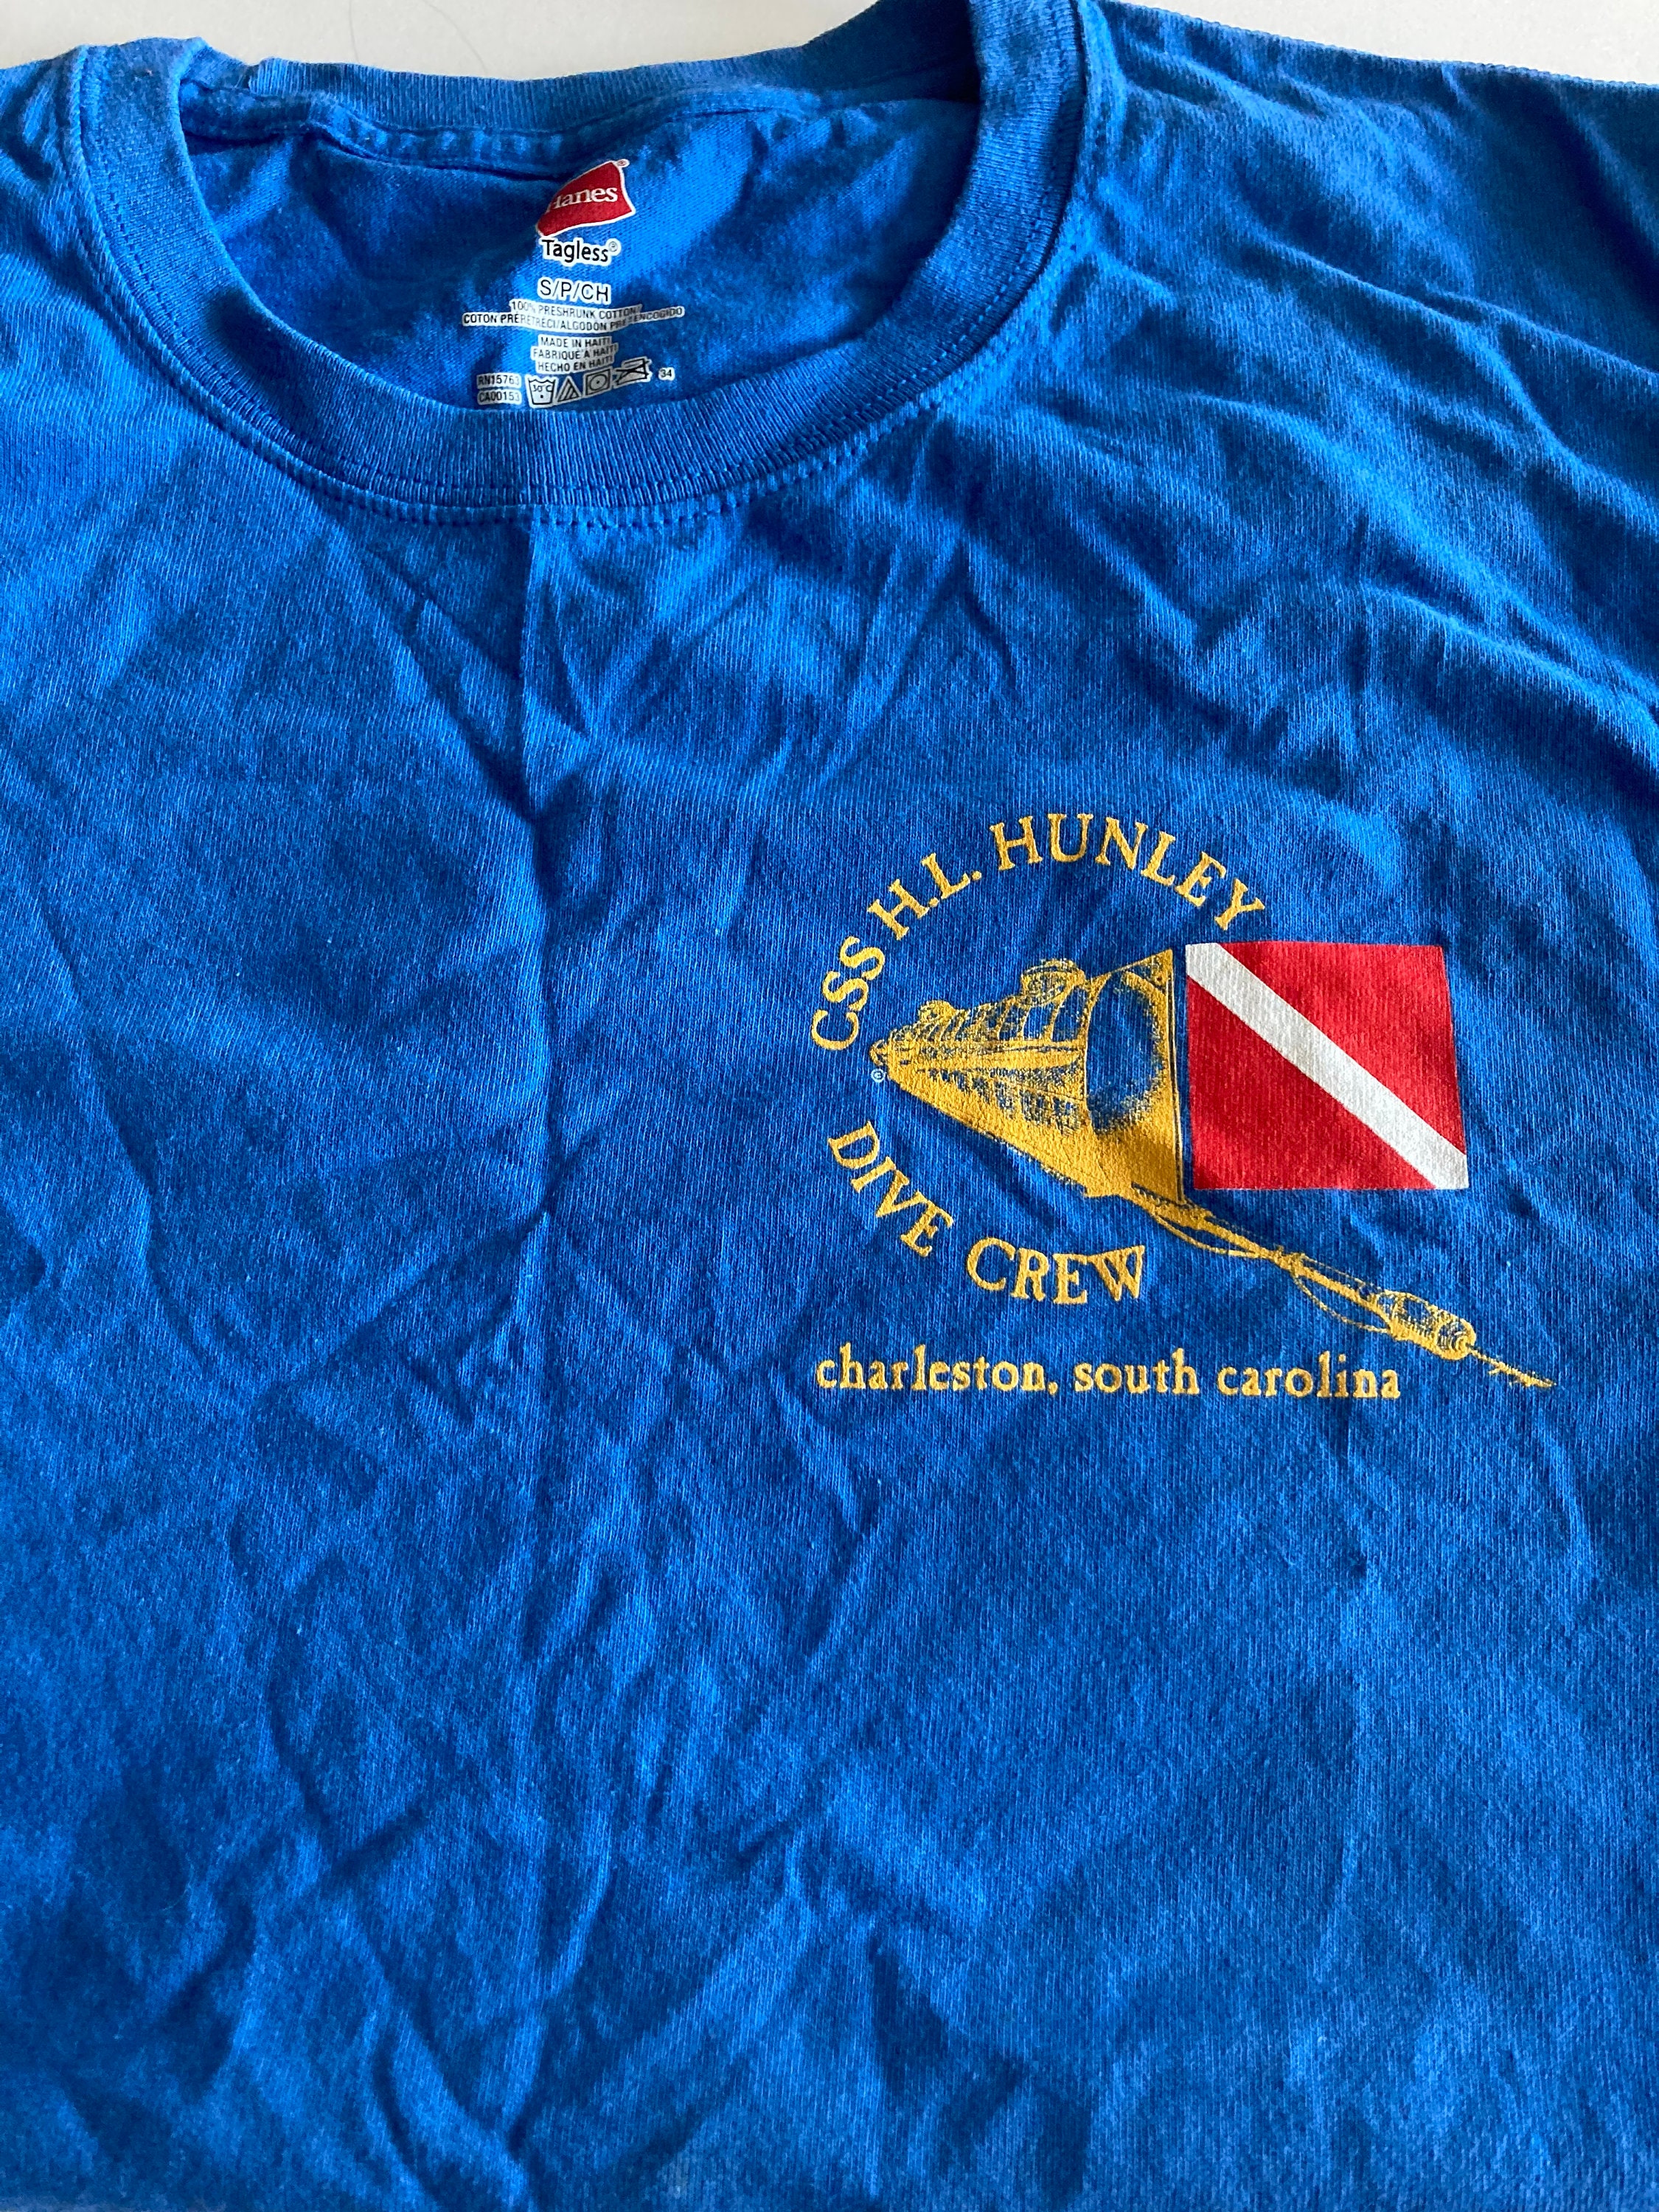 CSS HL Hunley Dive Crew Charleston SC Small T-shirt Submarine